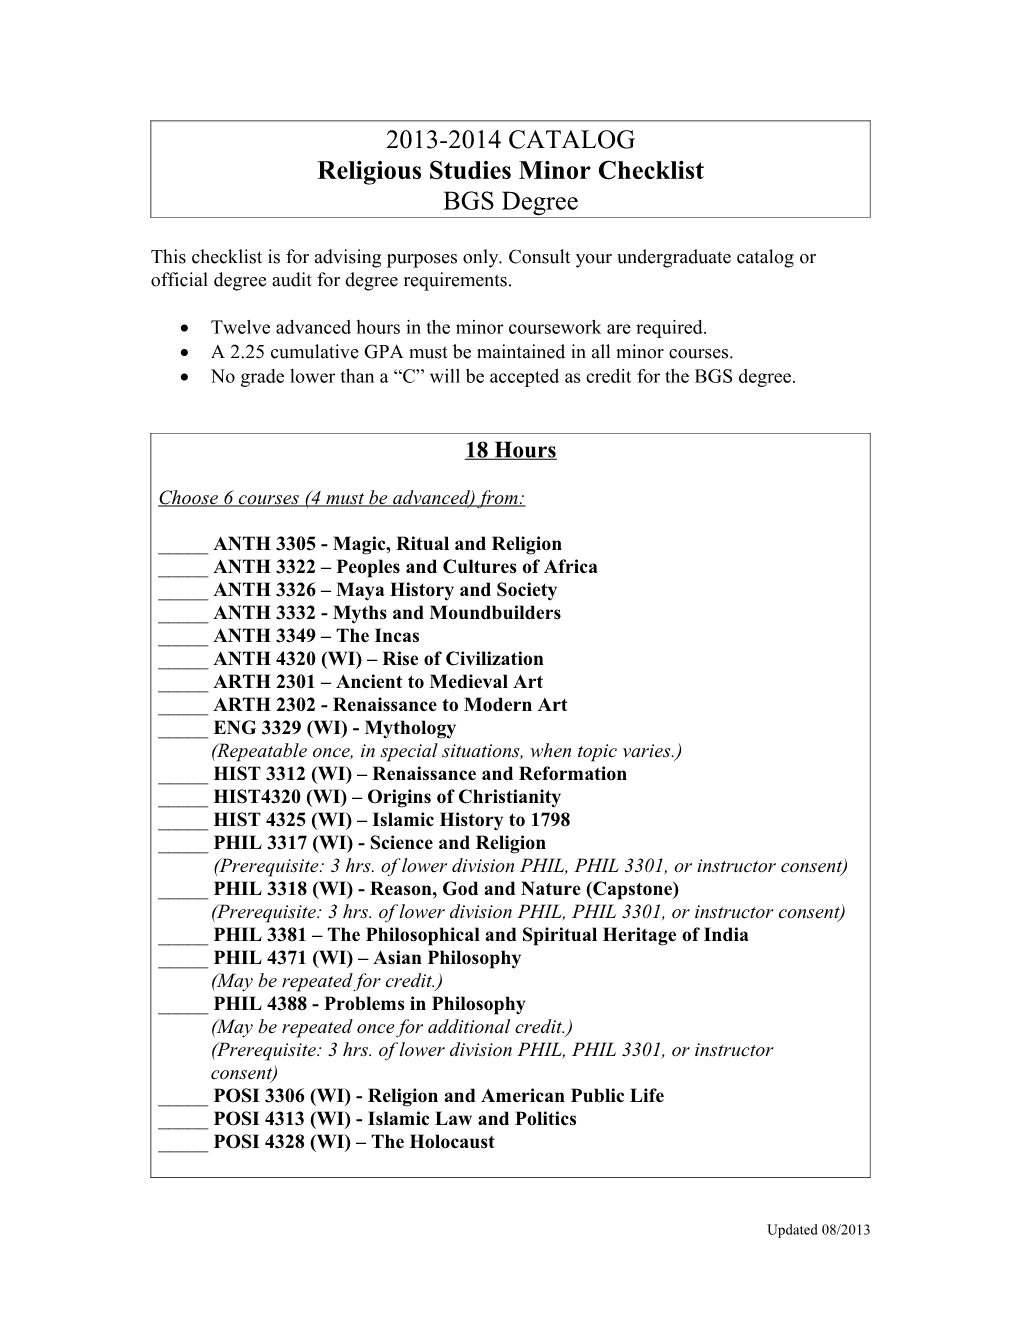 Religious Studies Minor Checklist